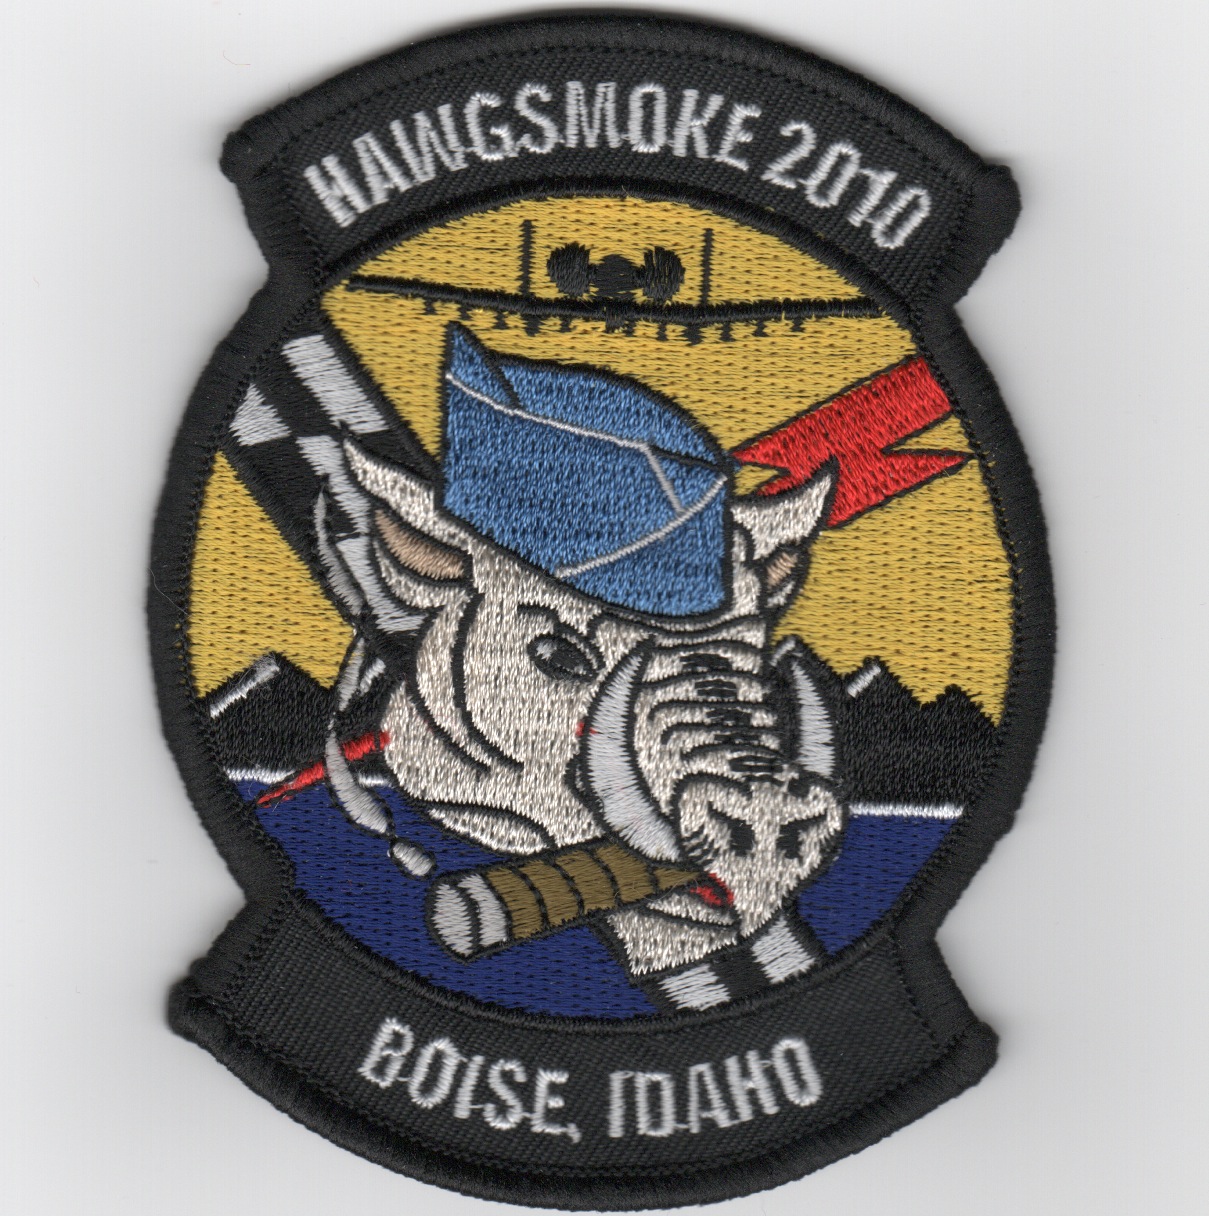 A-10's Hawgsmoke 2010